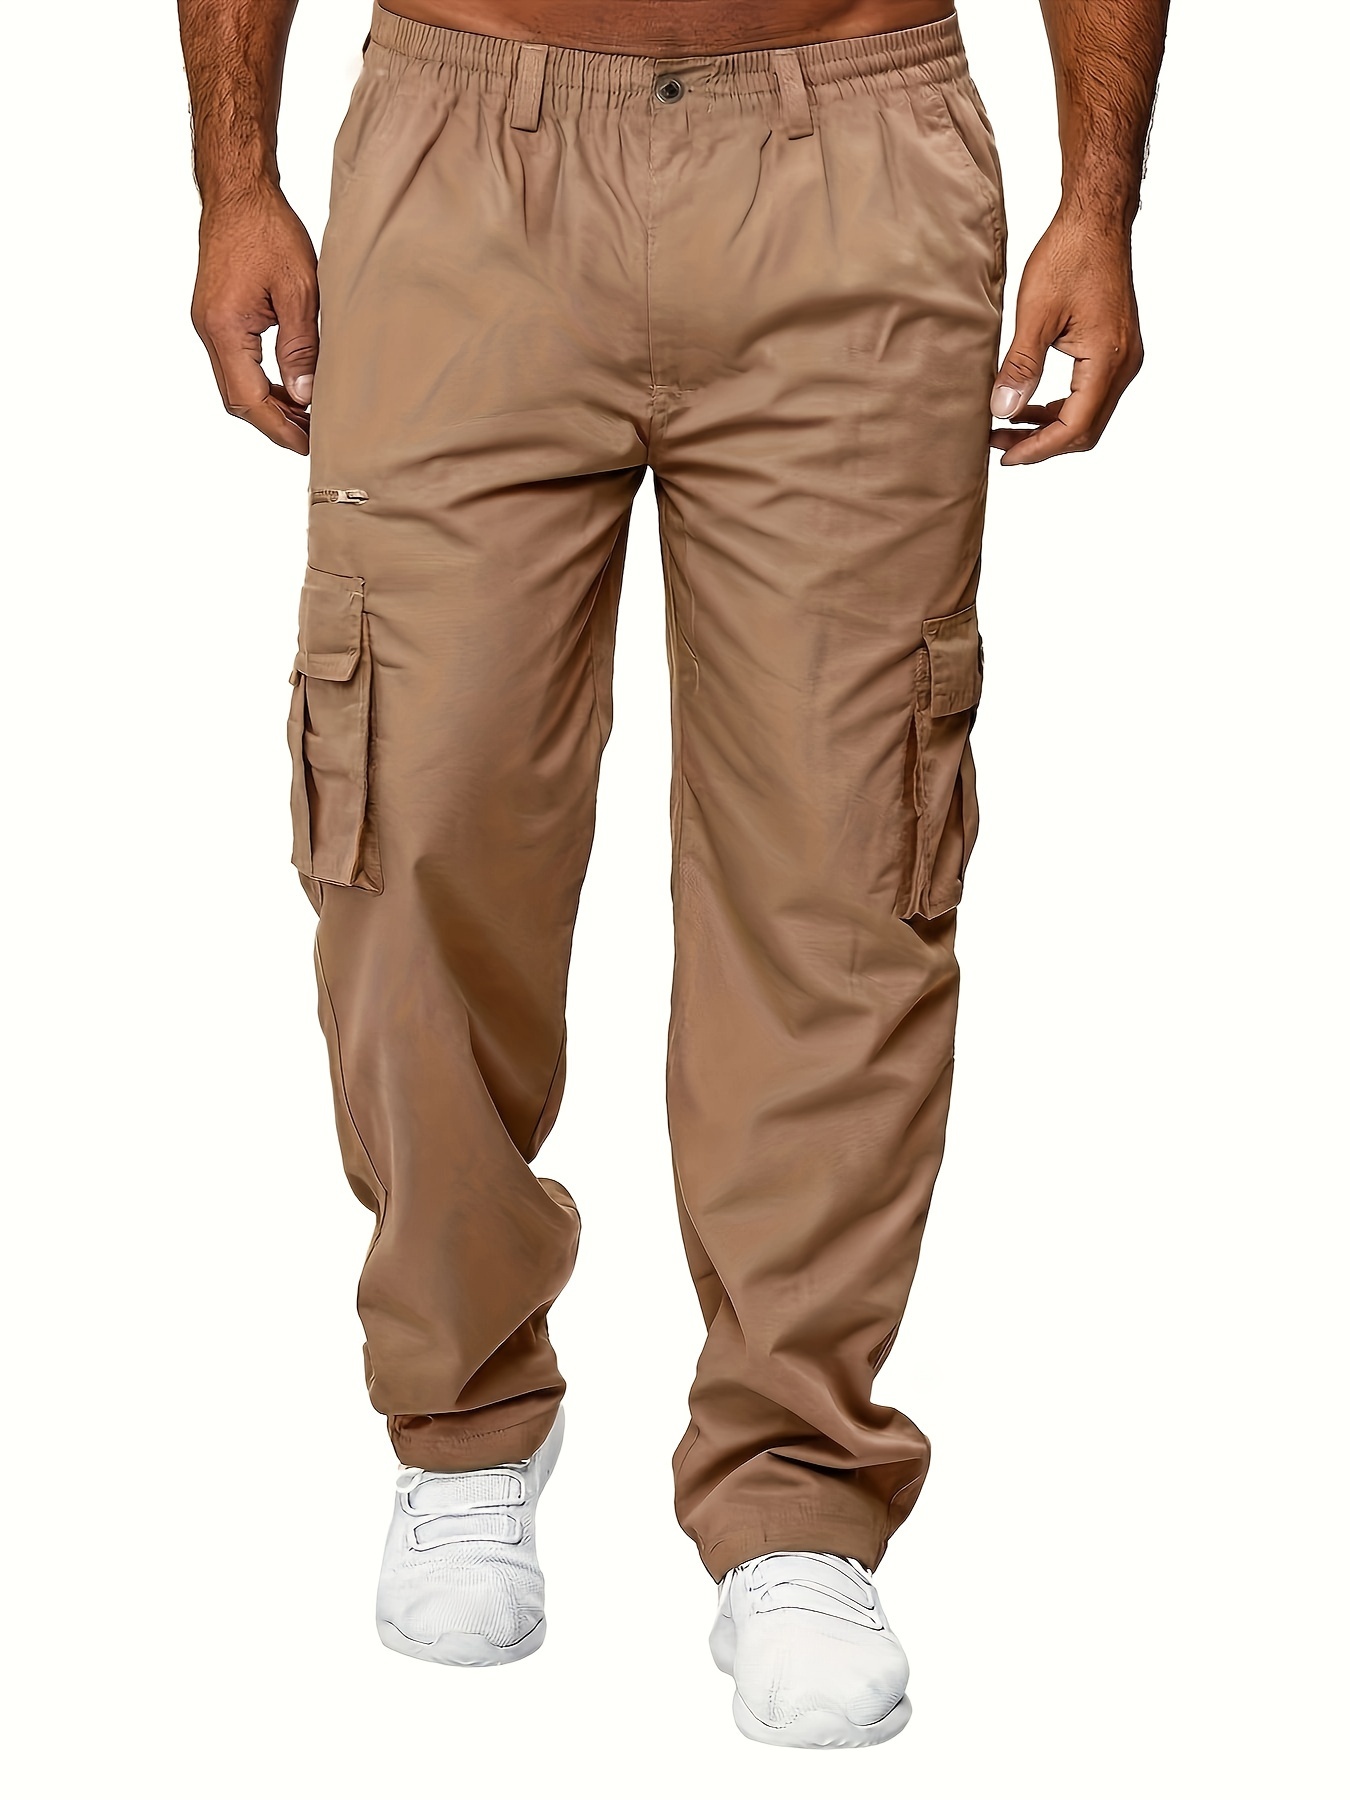 Mens New Elasticated Cargo Combat Work Cotton lightweight Trousers Pants  Bottoms